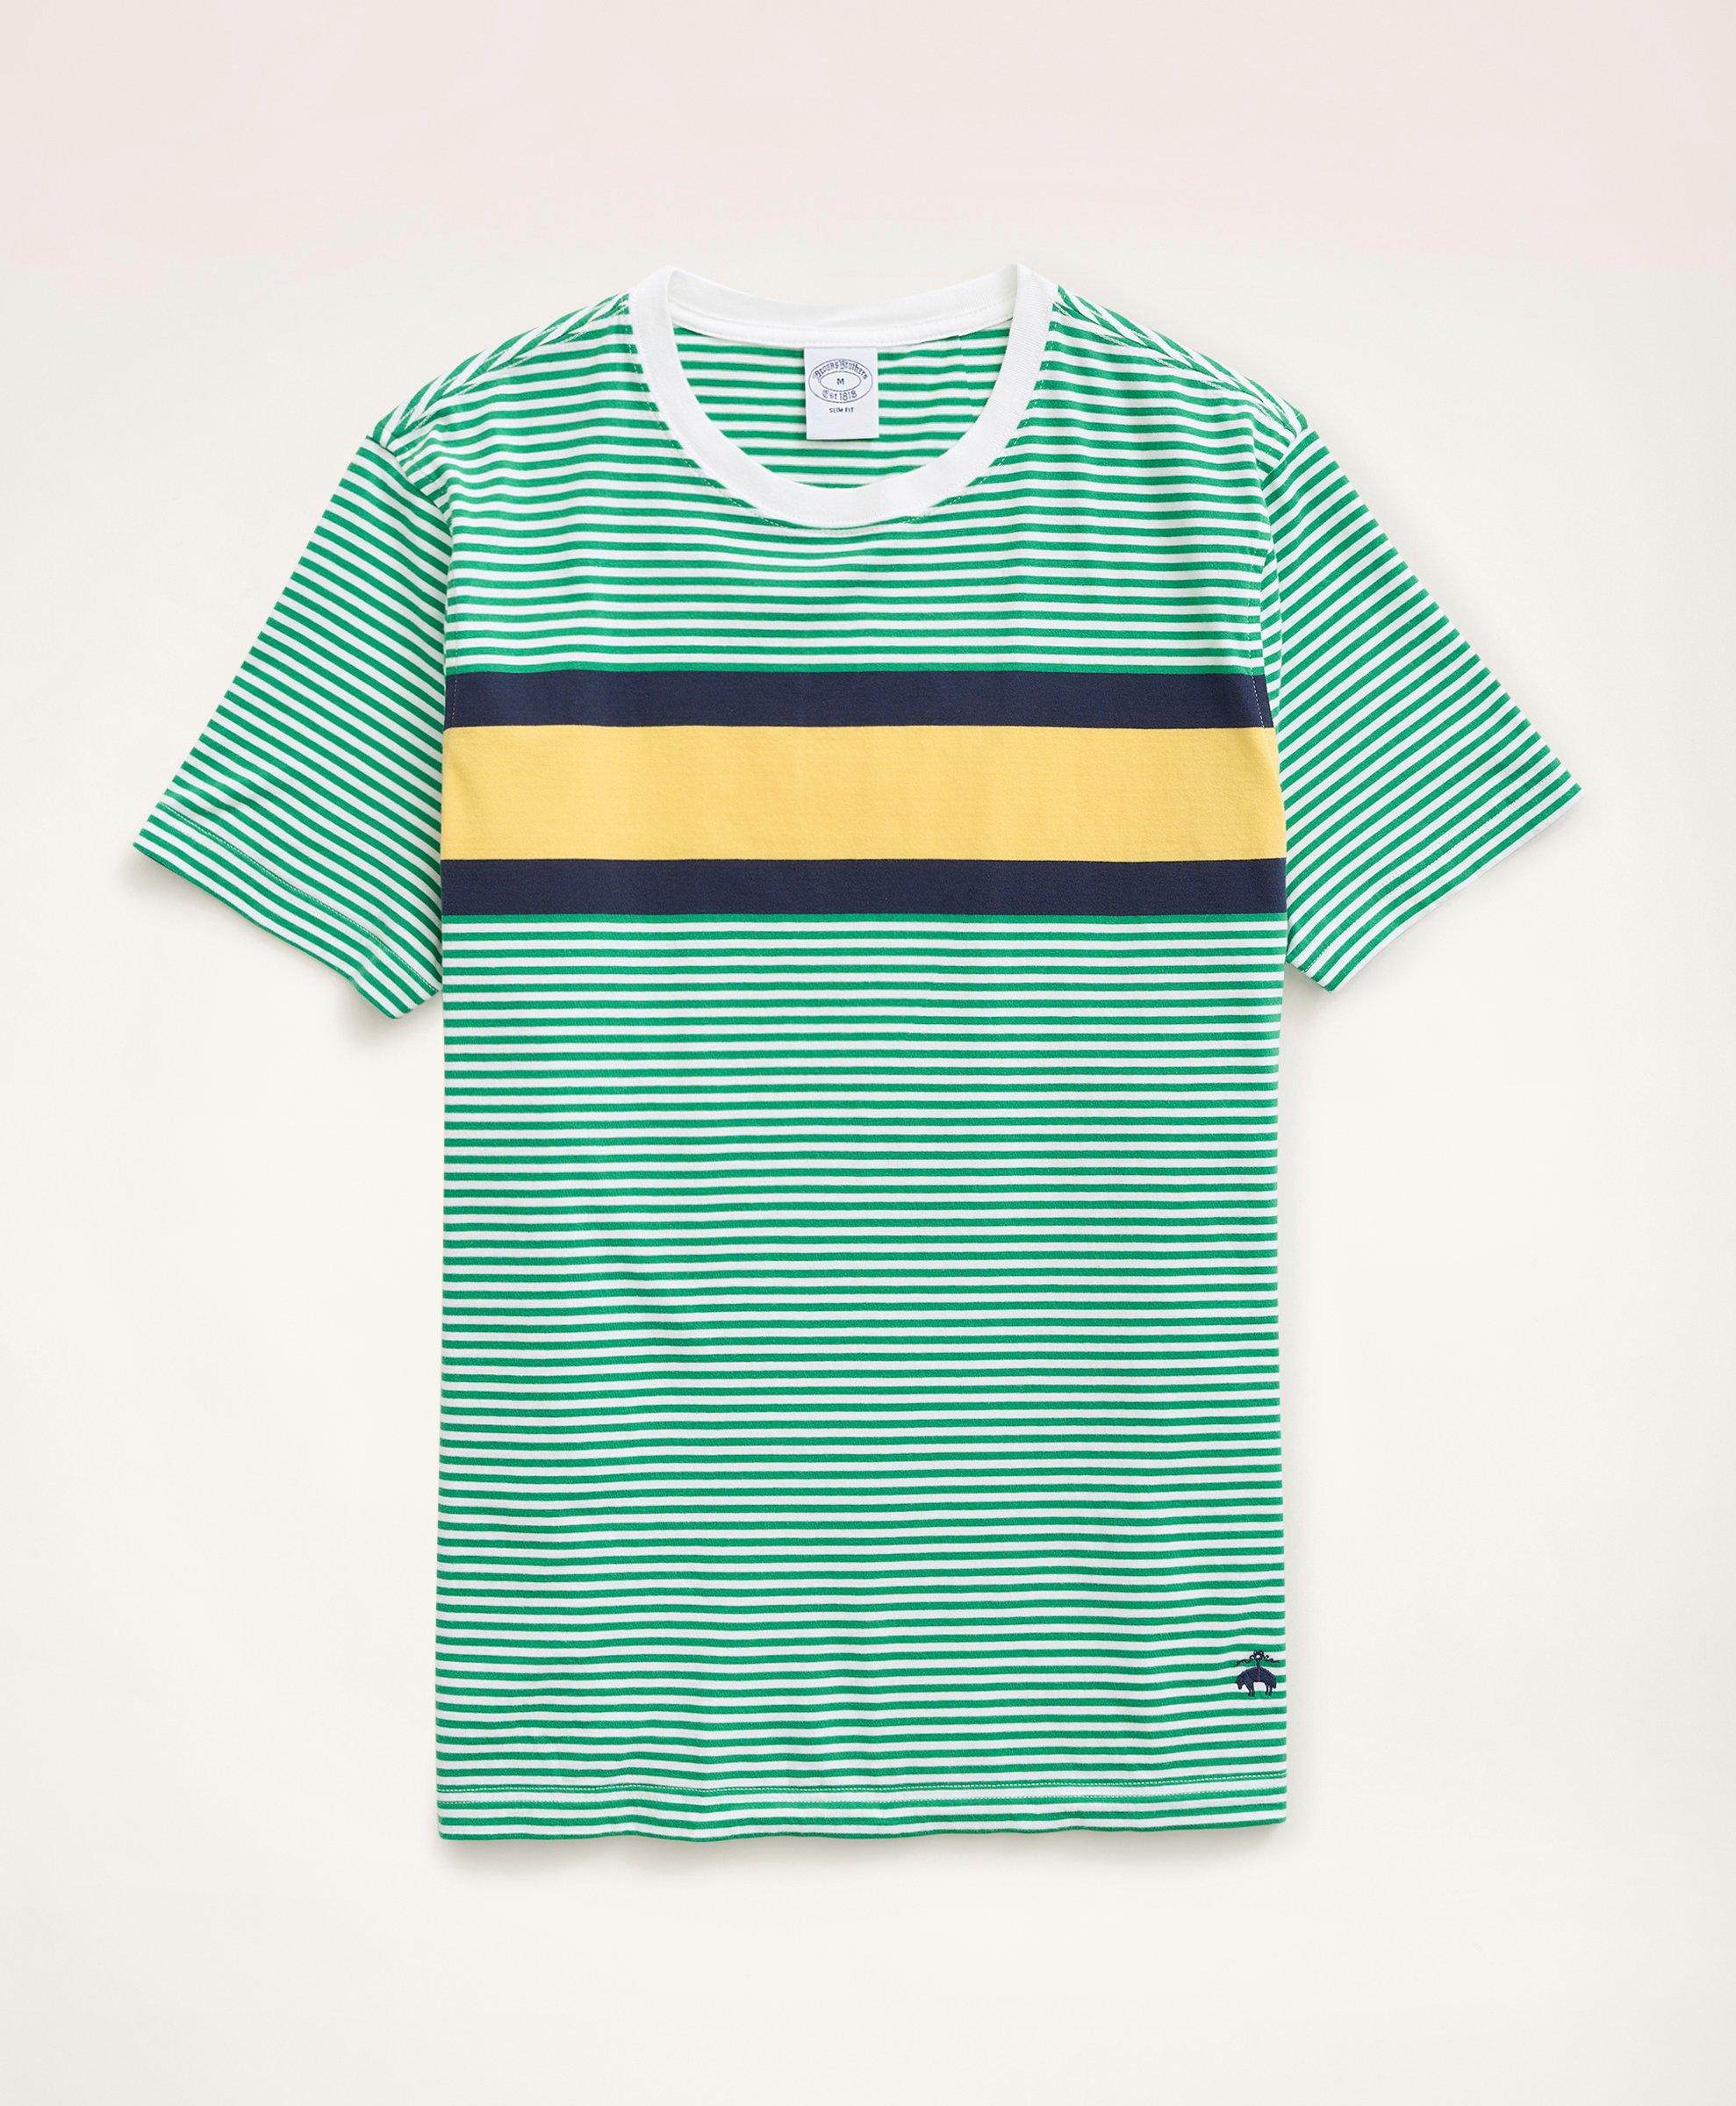 Chest Stripe T-Shirt, image 1